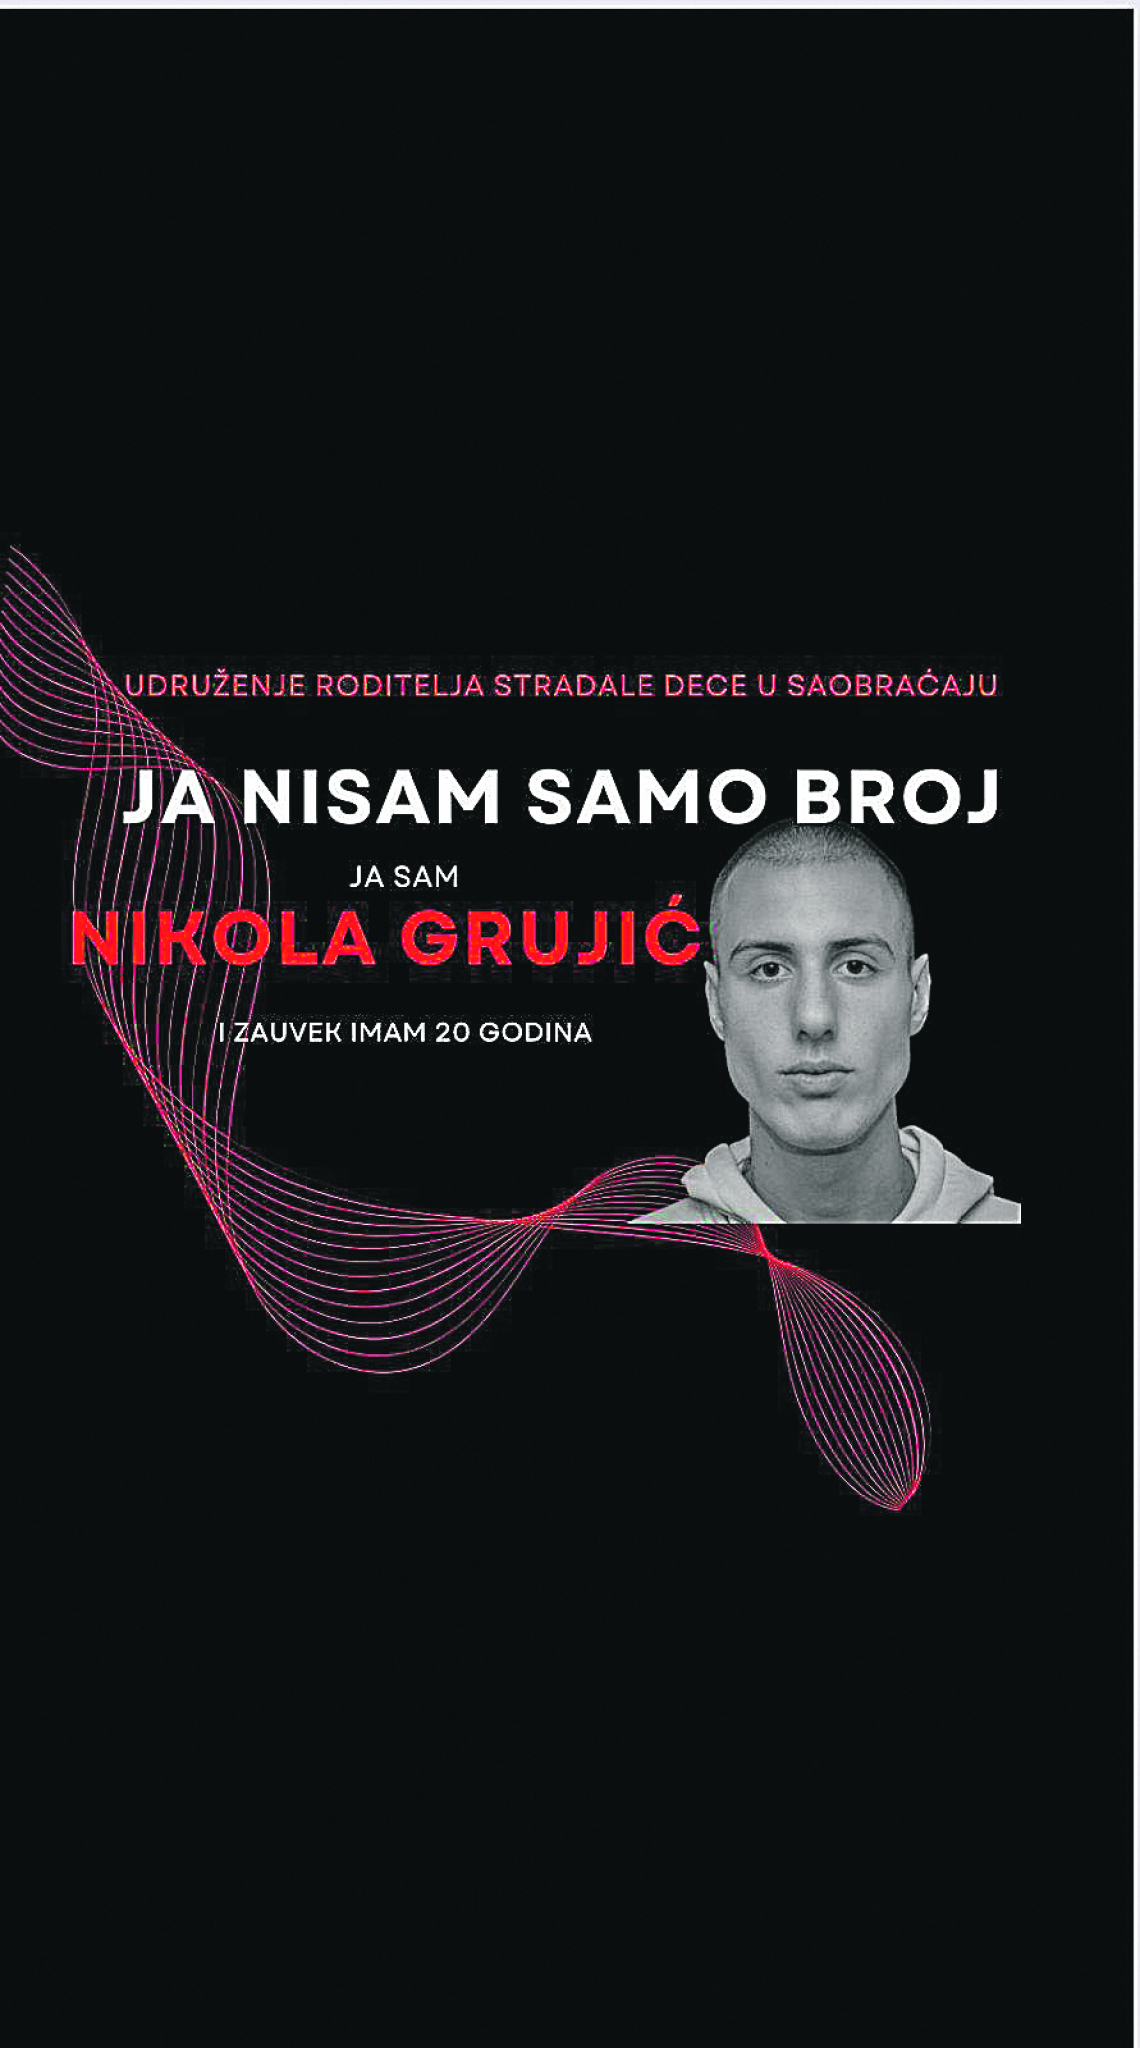 Nikola Grujić